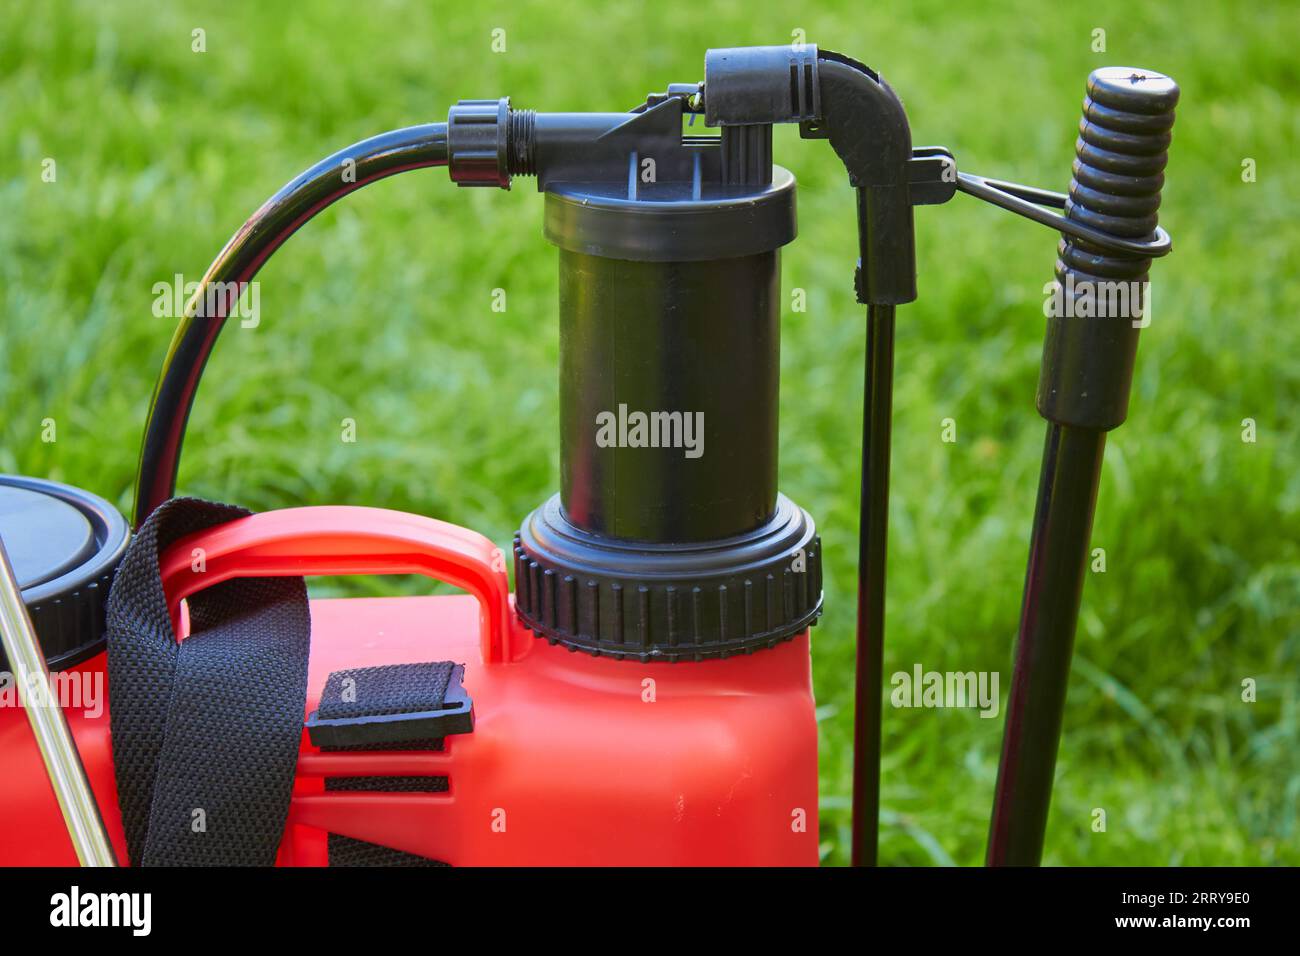 garden sprayer with hand pump close up Stock Photo